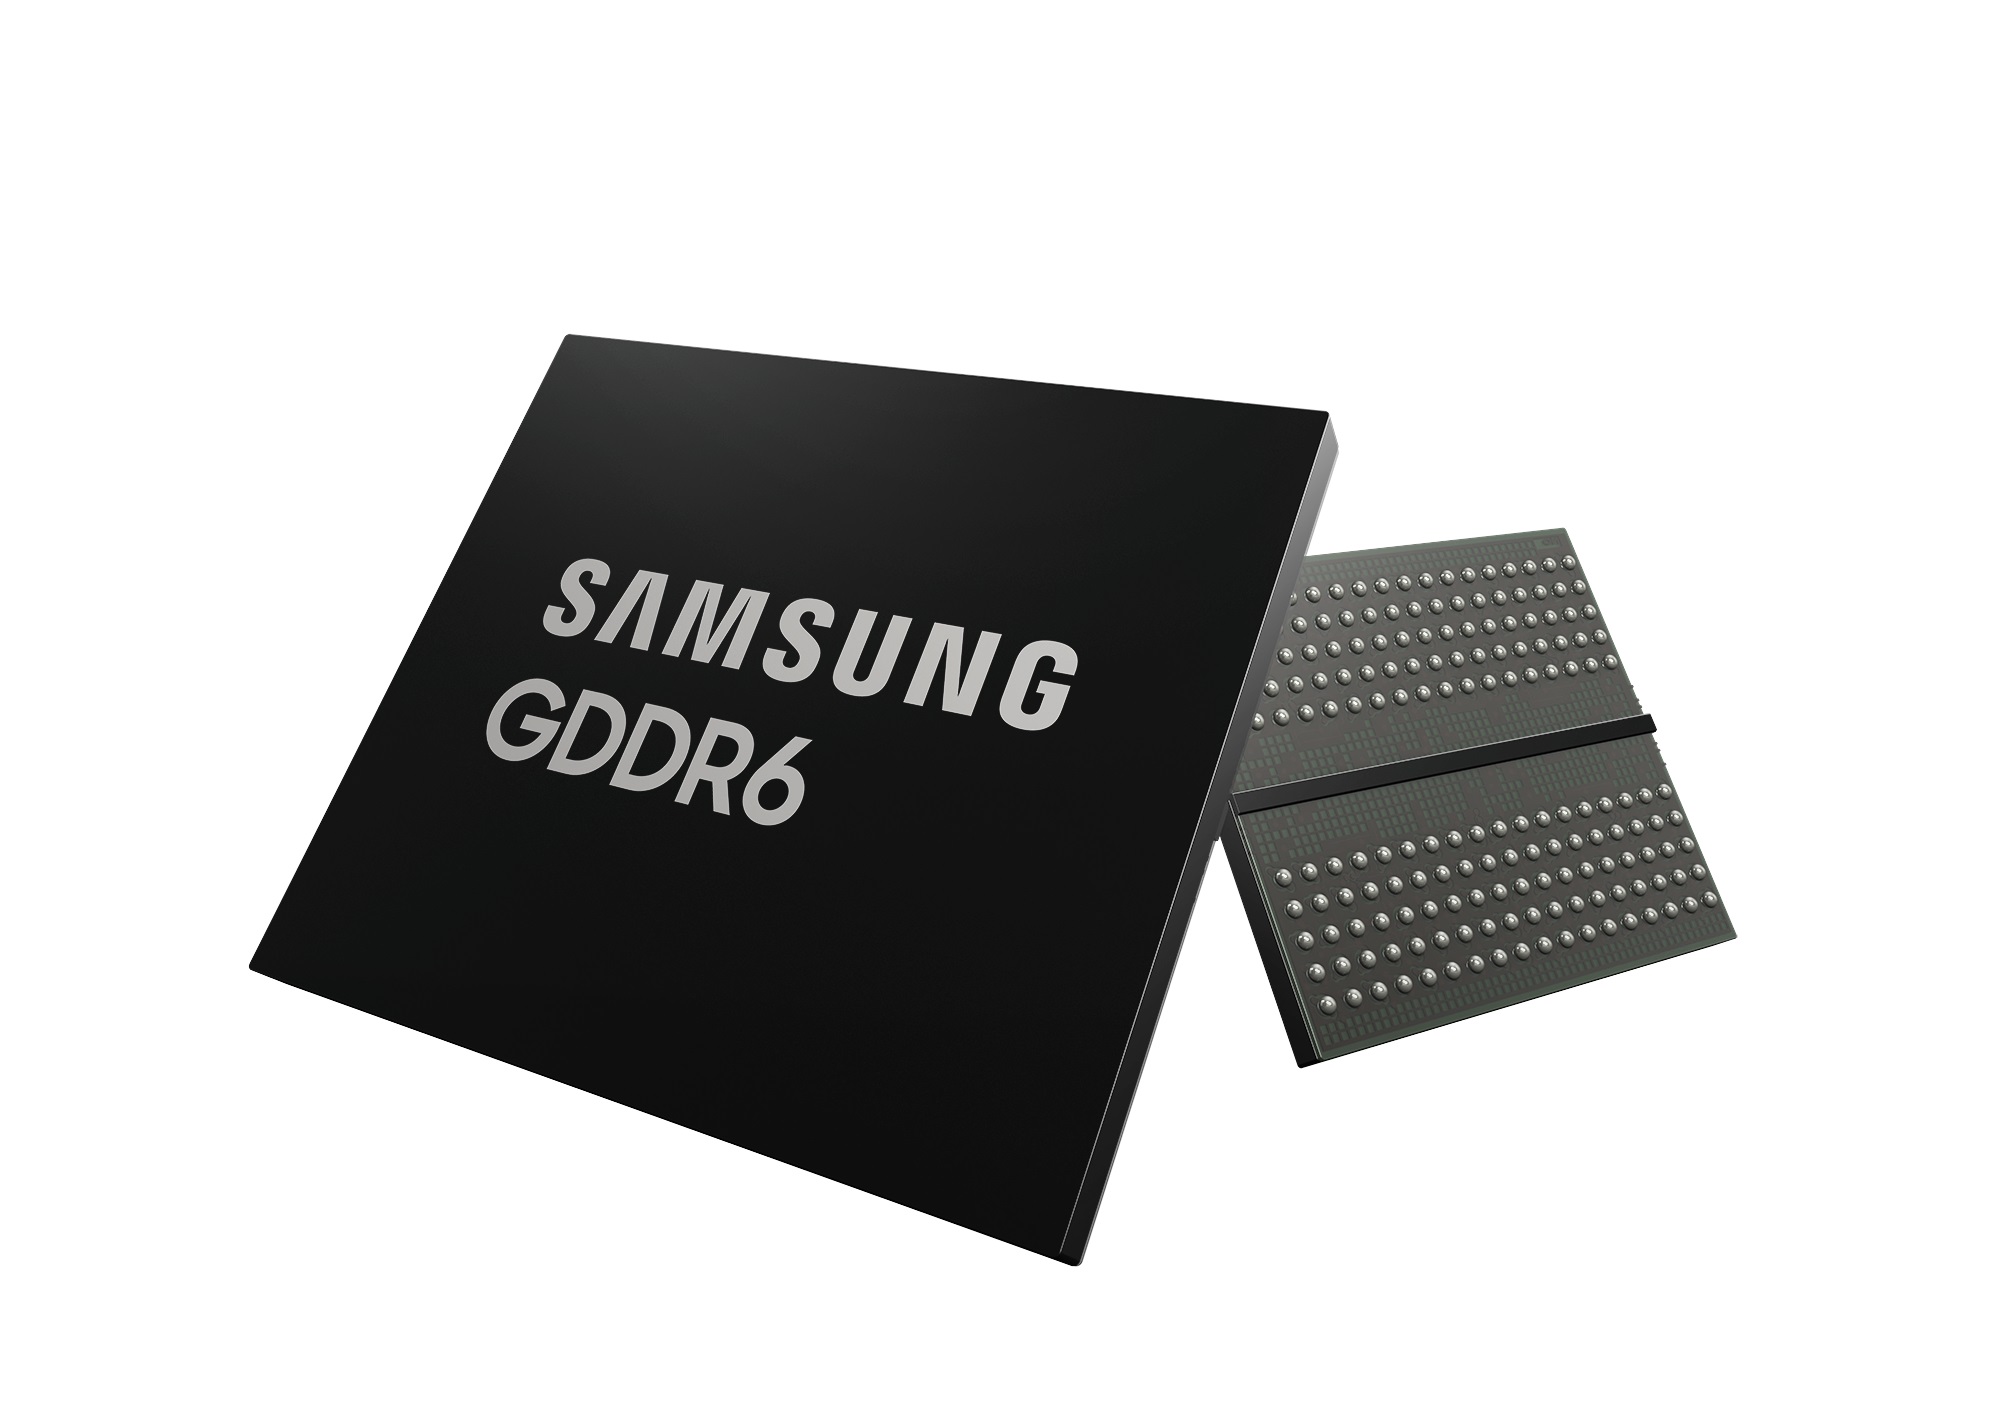 Samsung GDDR6 DRAM will offer 24 Gbps memory speed